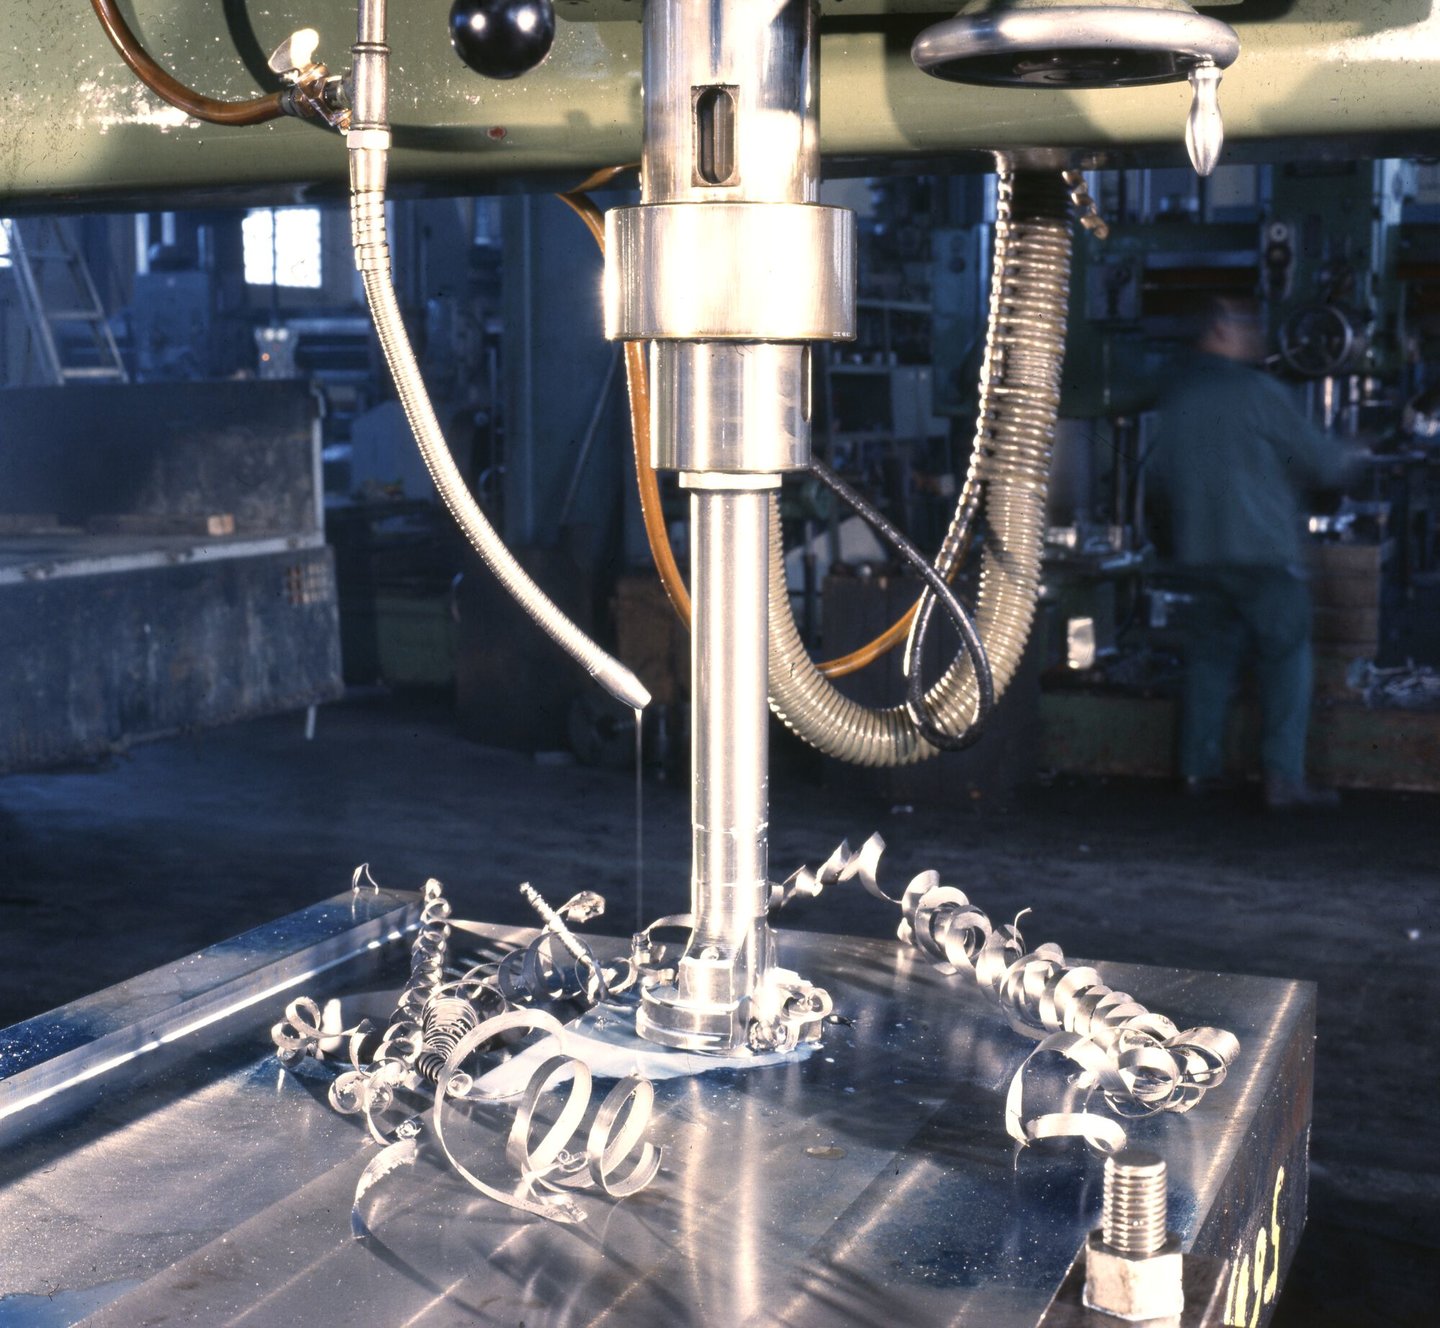 Detail radiaalboormachine in machinewerkplaats van Gentse Metaalwerken in Gent